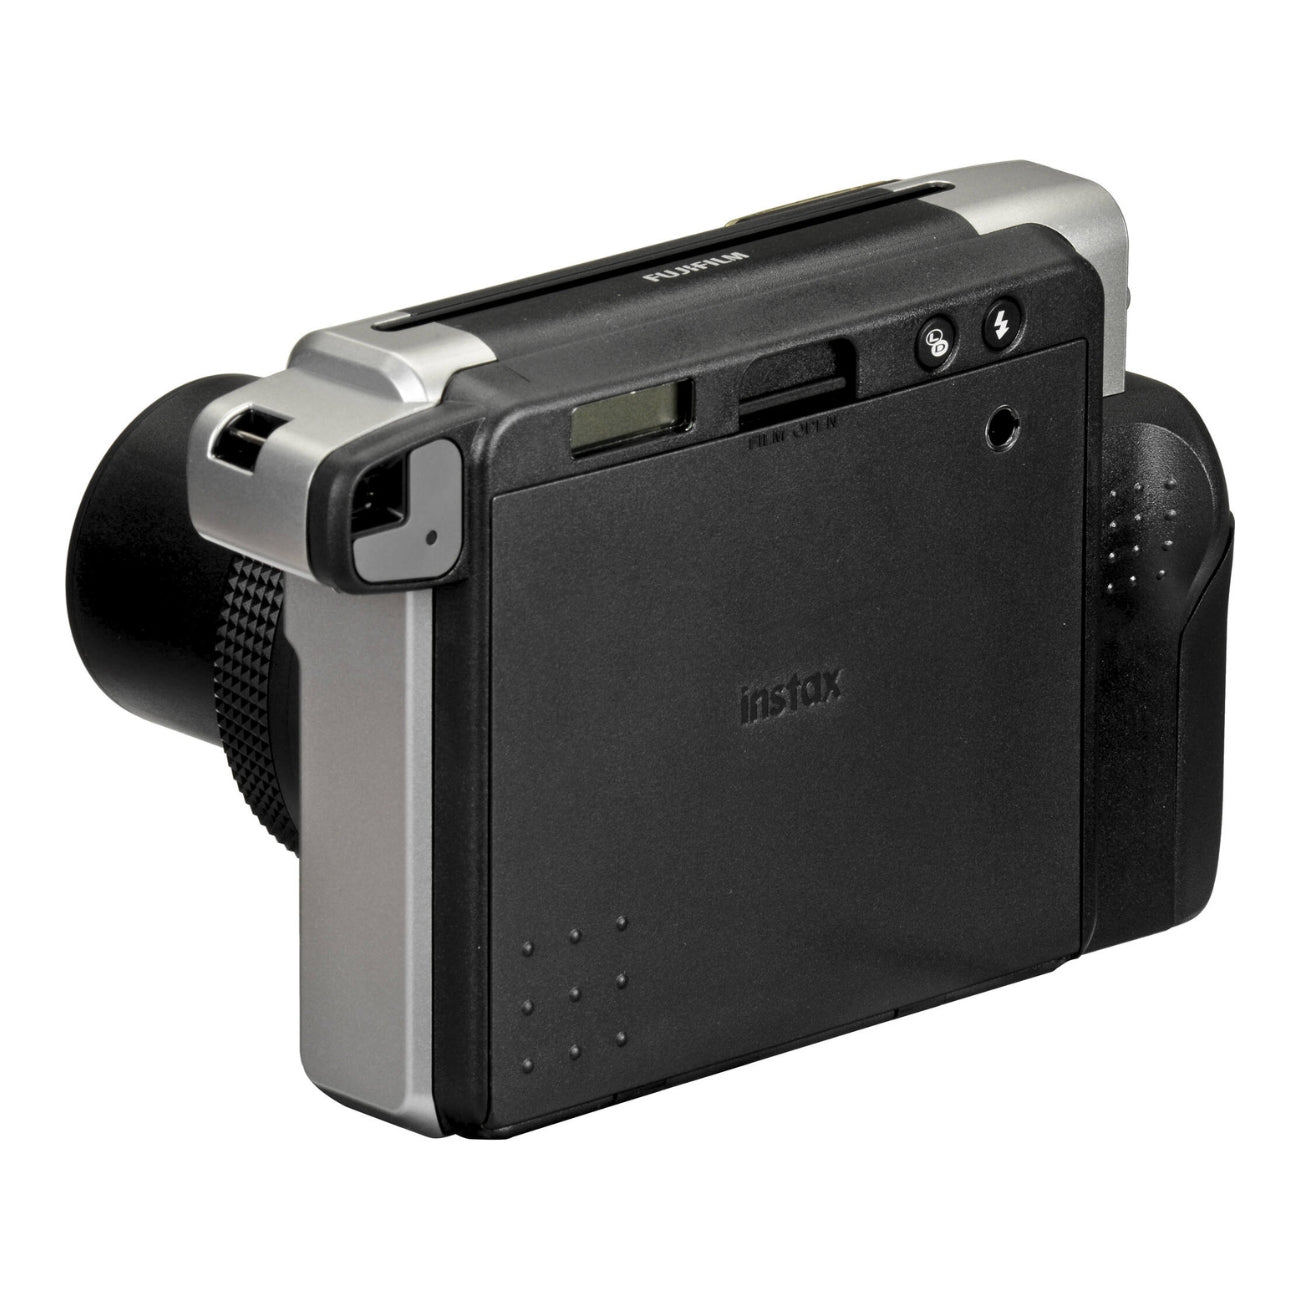 Fujifilm Instax Wide 300 - Black